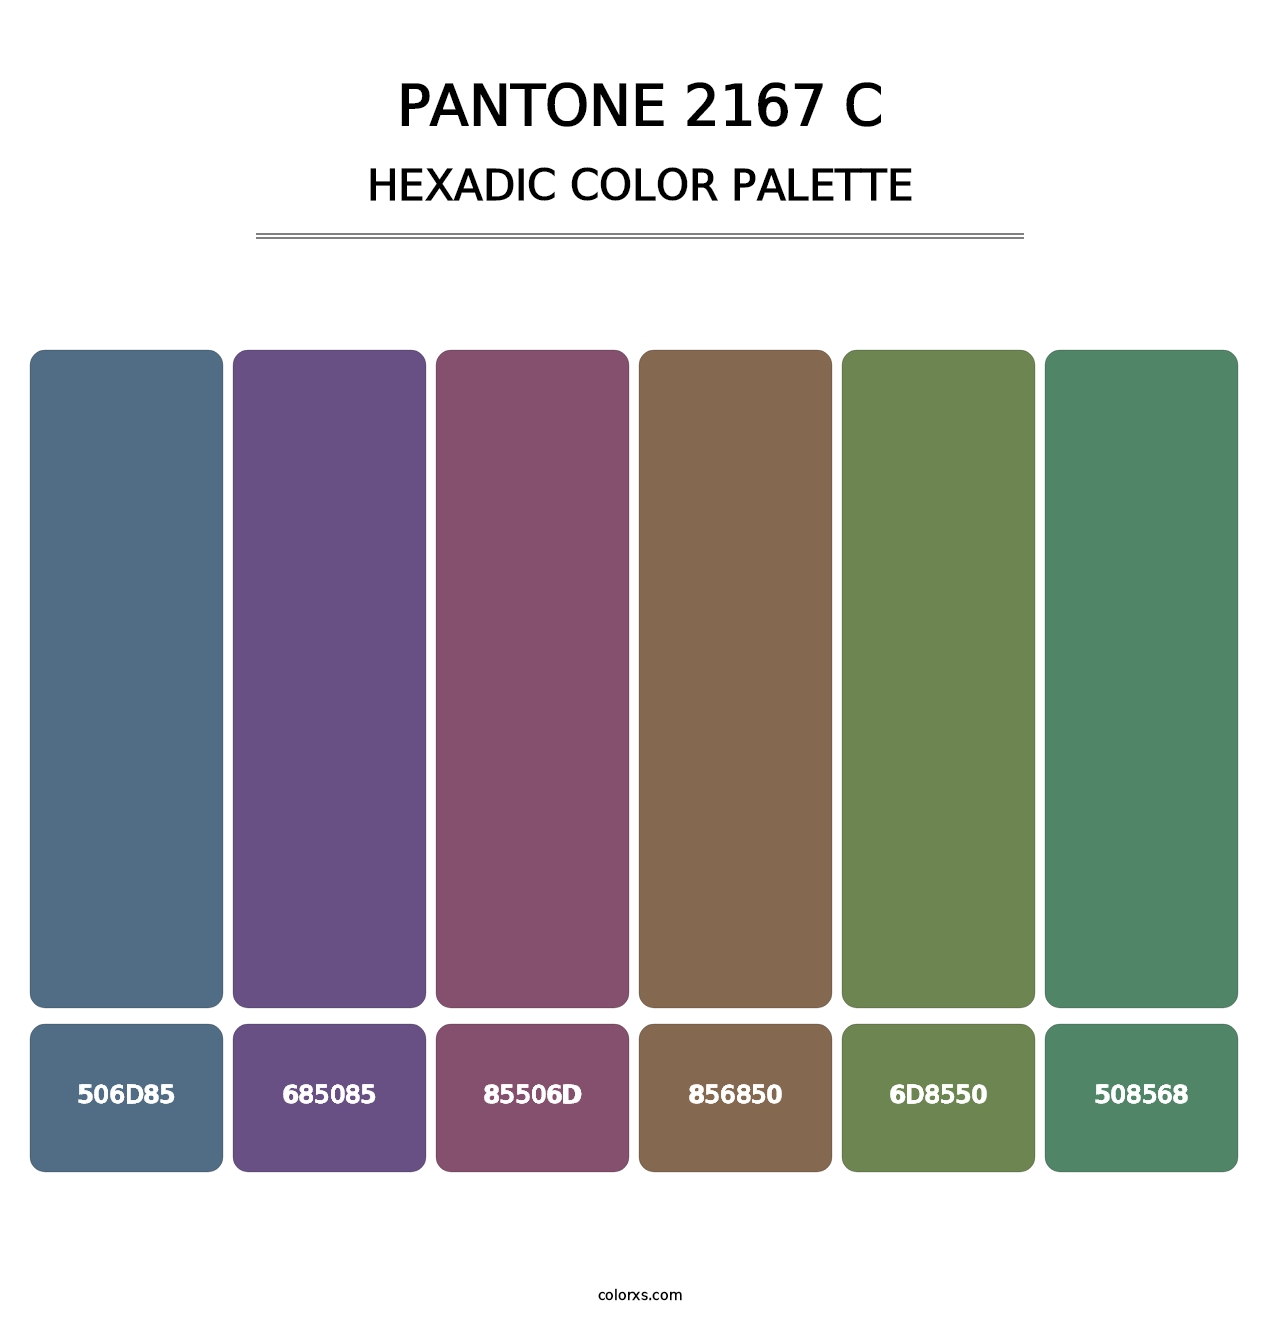 PANTONE 2167 C - Hexadic Color Palette